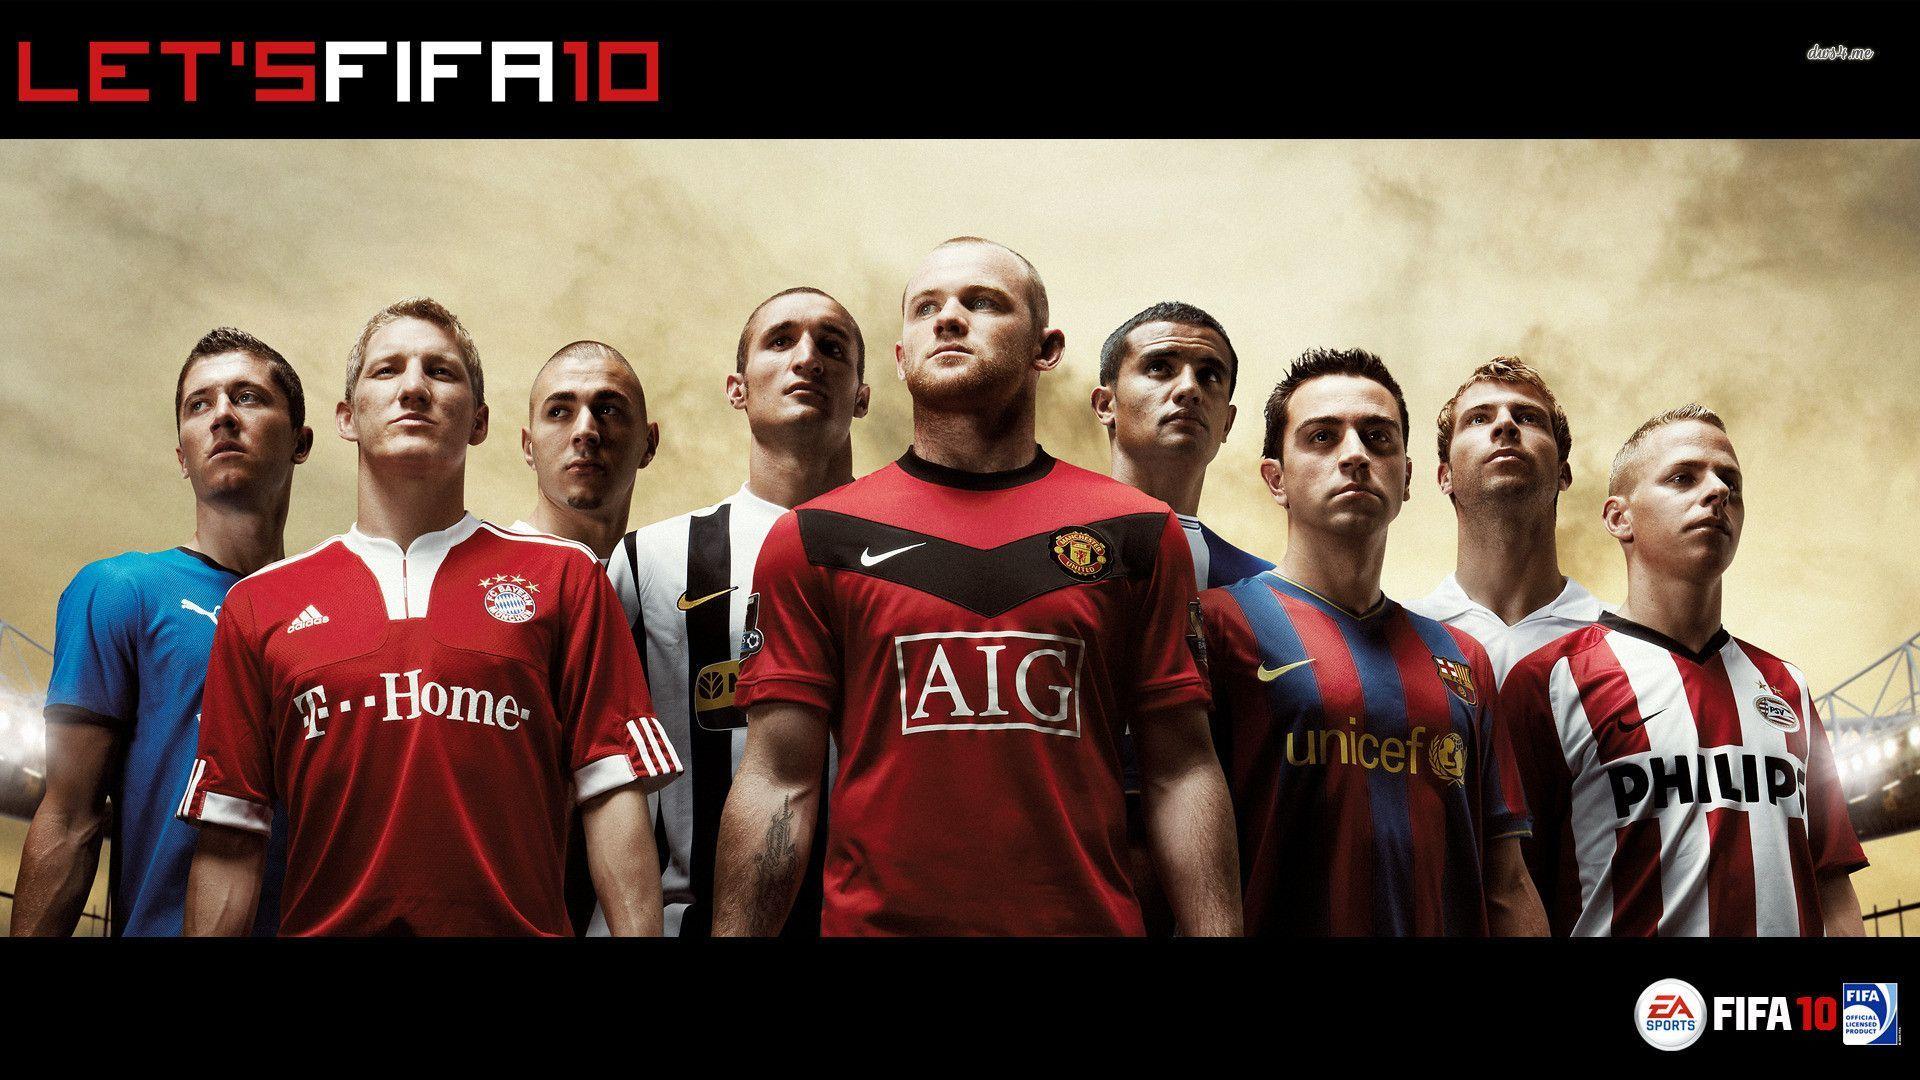 FIFA 10 Game wallpaper for Samsung Wallpaper HD